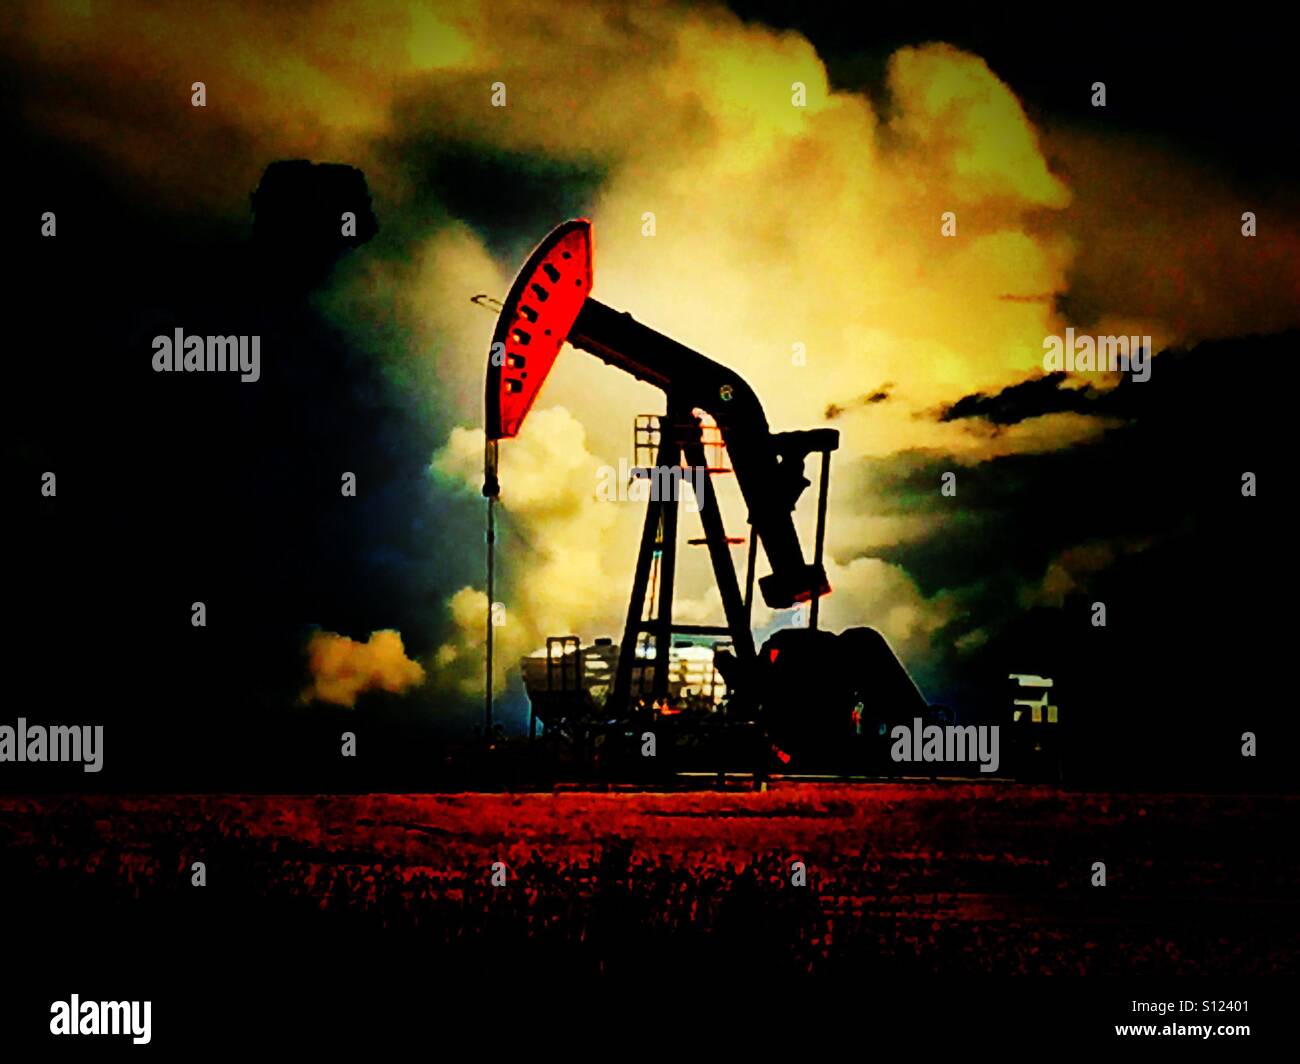 Oil well pump jack Stock Photo